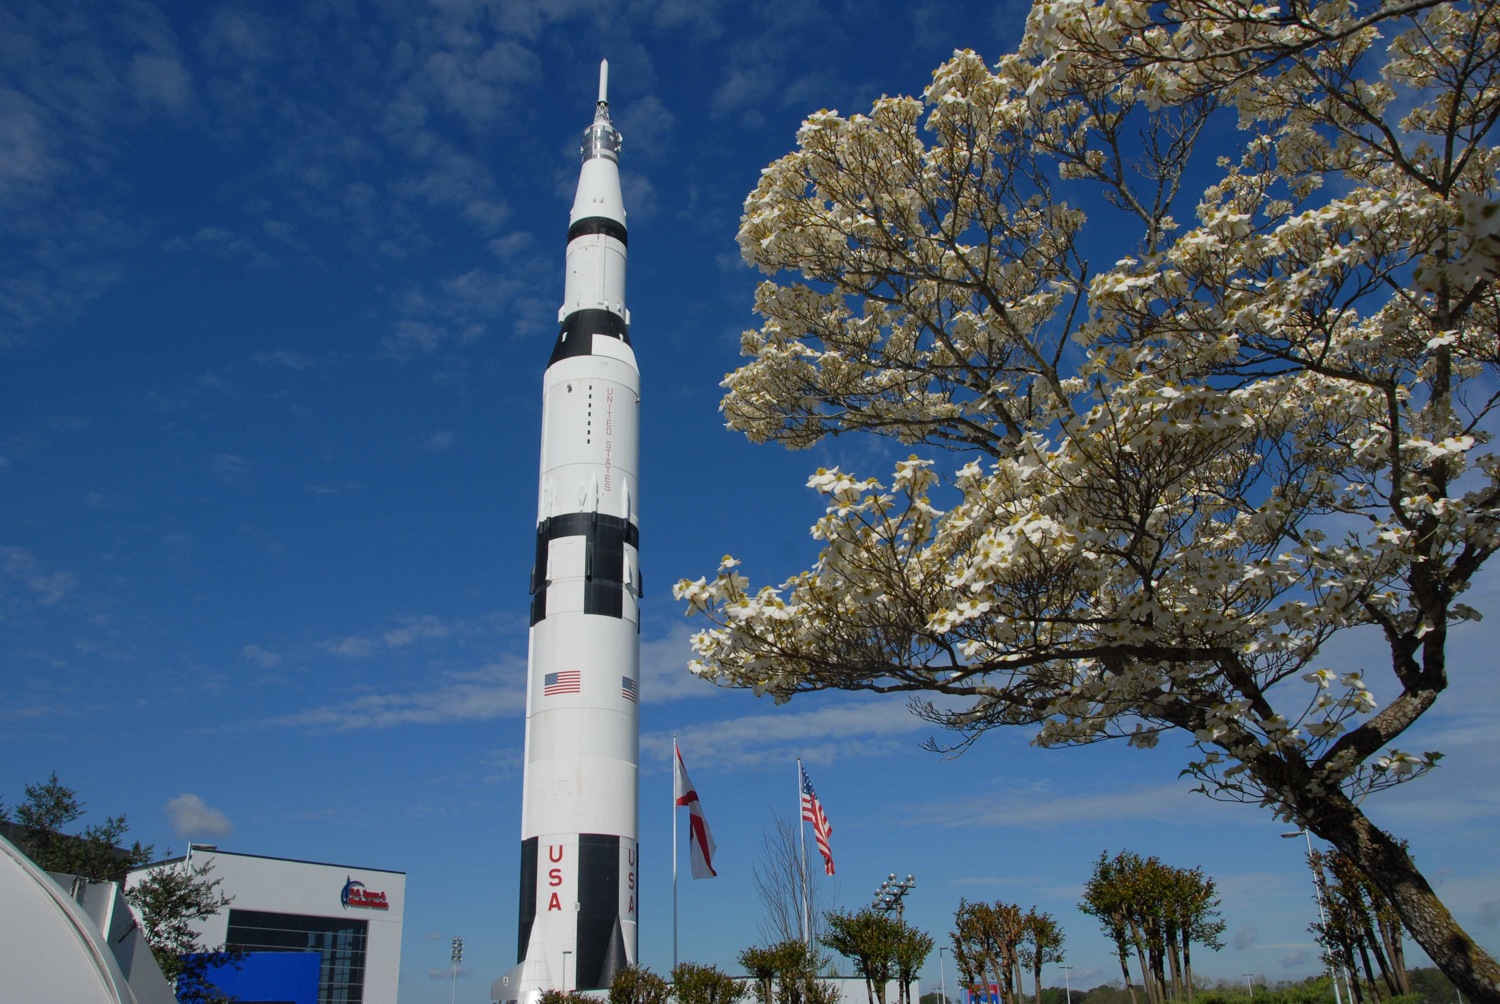 US Space and Rocket Center in Huntsville, Alabama USA ©Alabama Tourism Department / Intermark Group